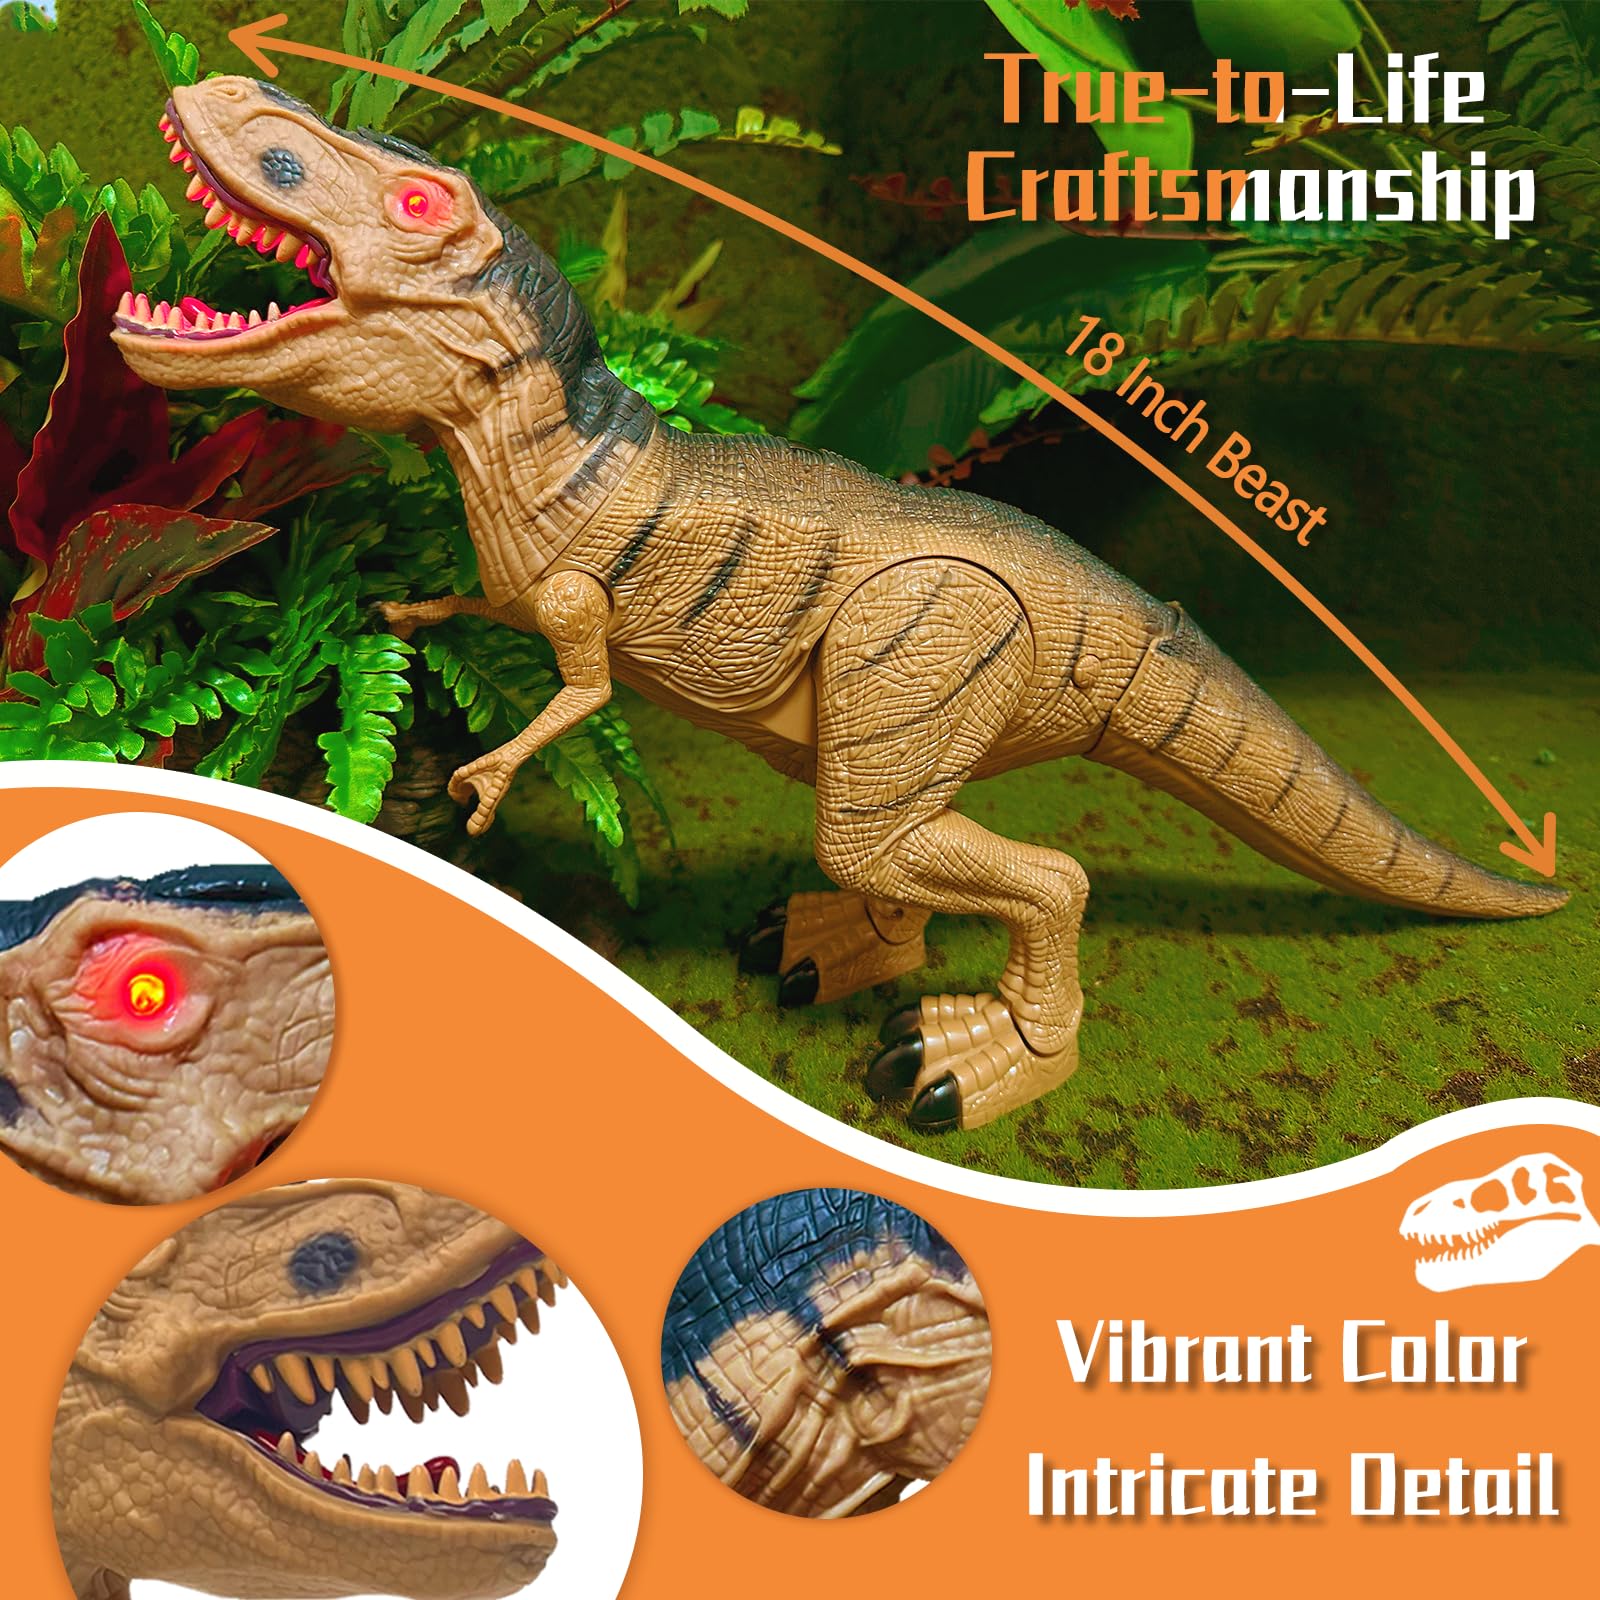 TALGIC Interactive Dinosaur Toys for Kids 3 4 5 6+,Ideal Birthday Present Tyrannosaurus Yellow Robot Dinosaur- Spray Stream,Realistic Roaring and Walking with Electronic Light